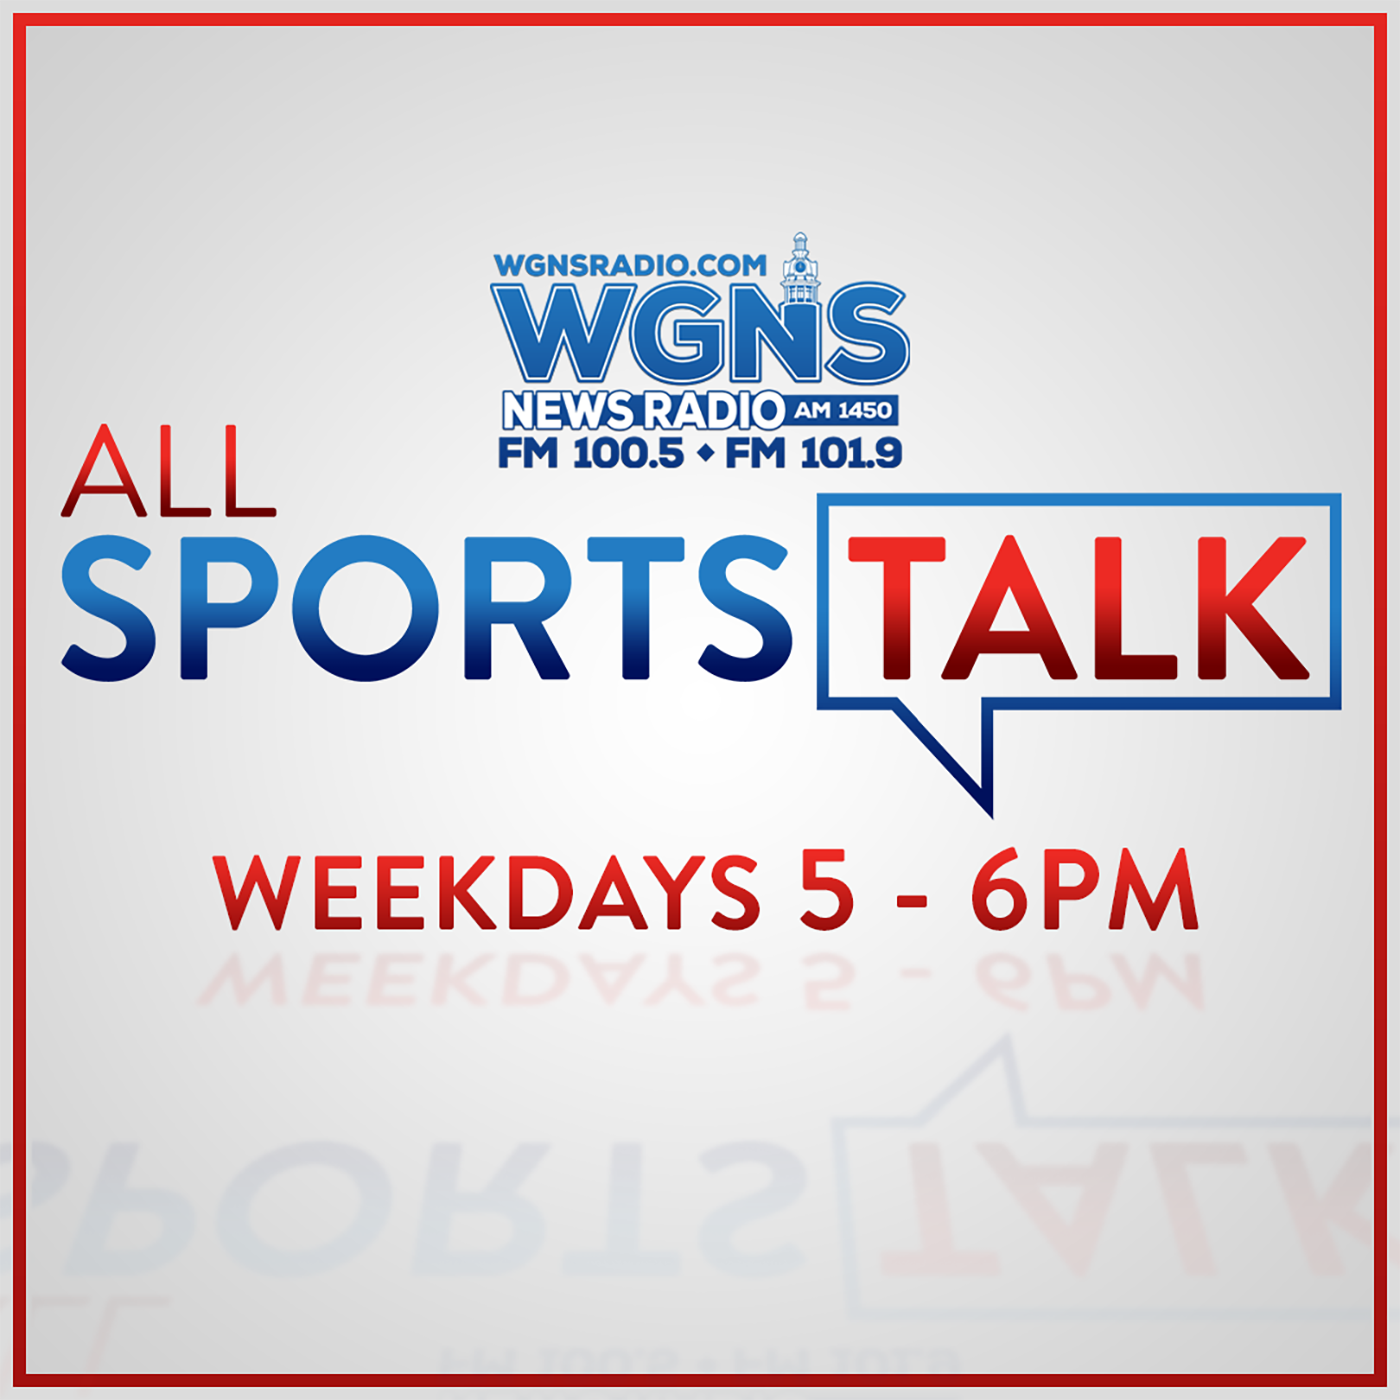 Thursday, April 22nd 2021: All Sports Talk